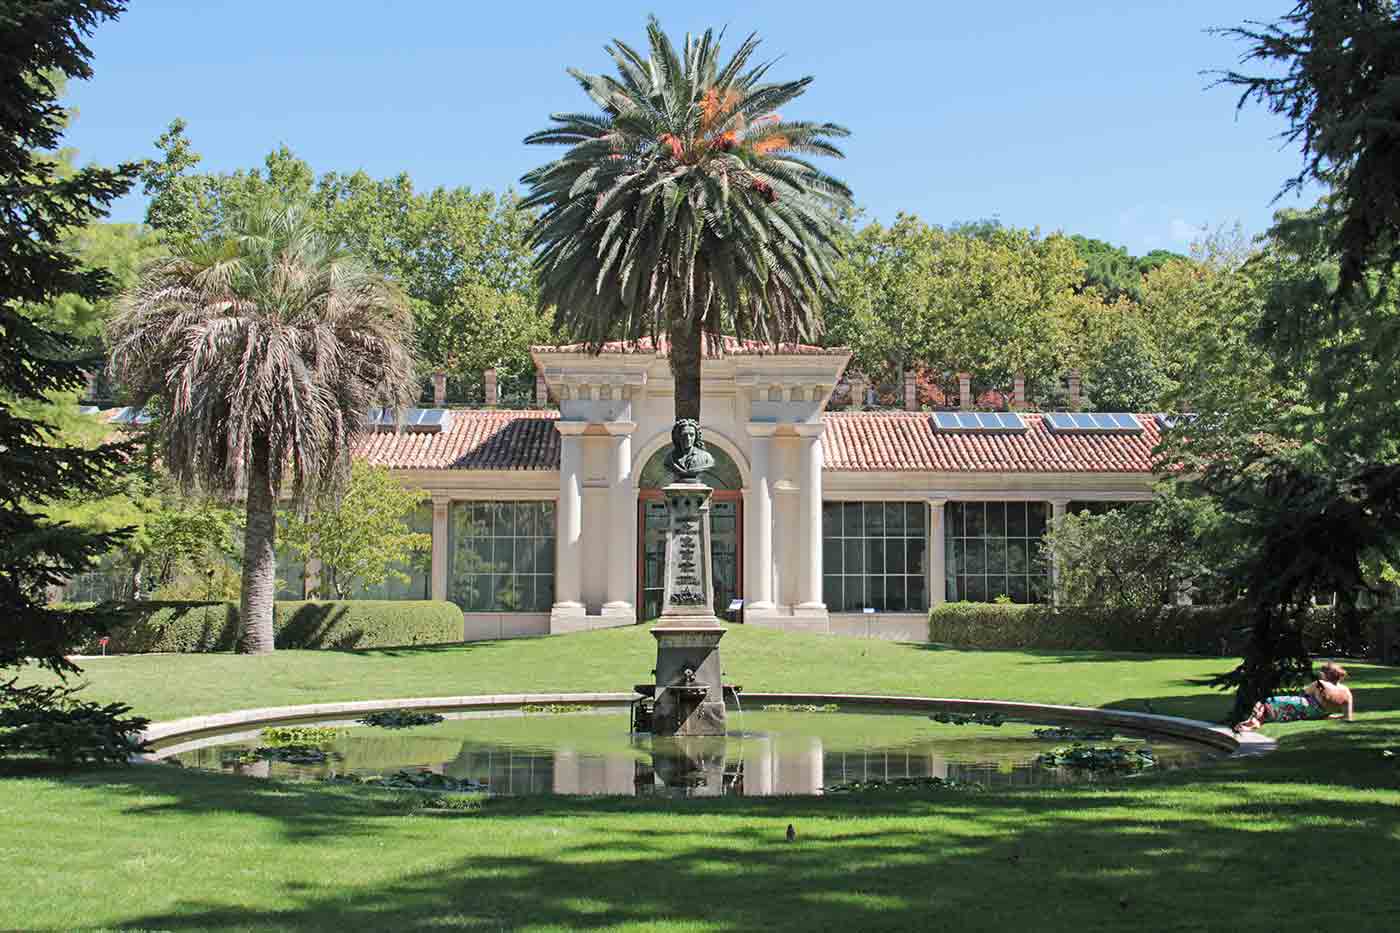 Royal Botanical Garden